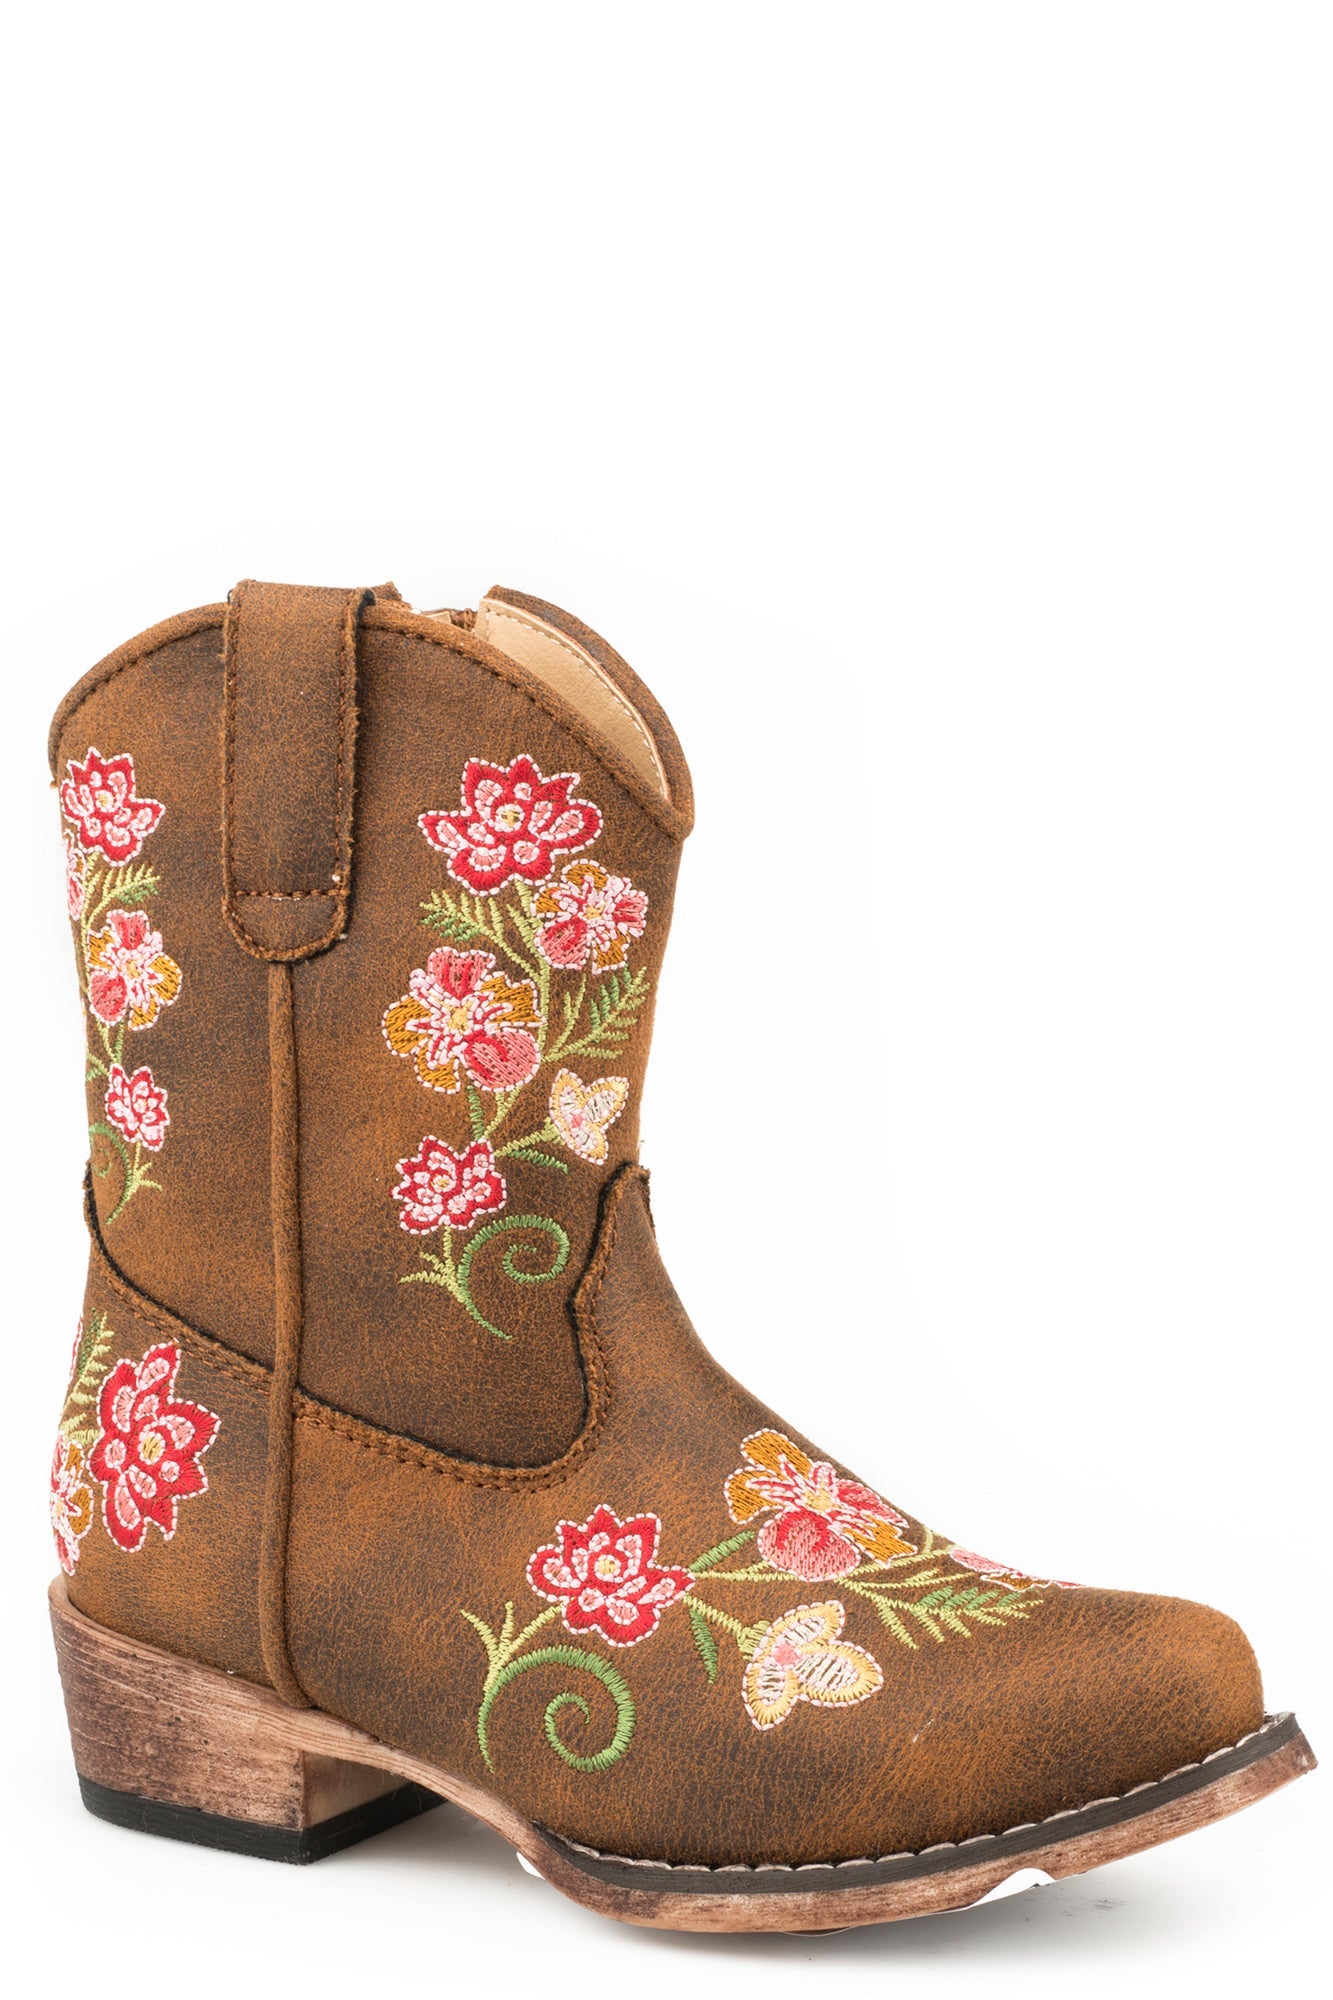 roper girls cowboy boots